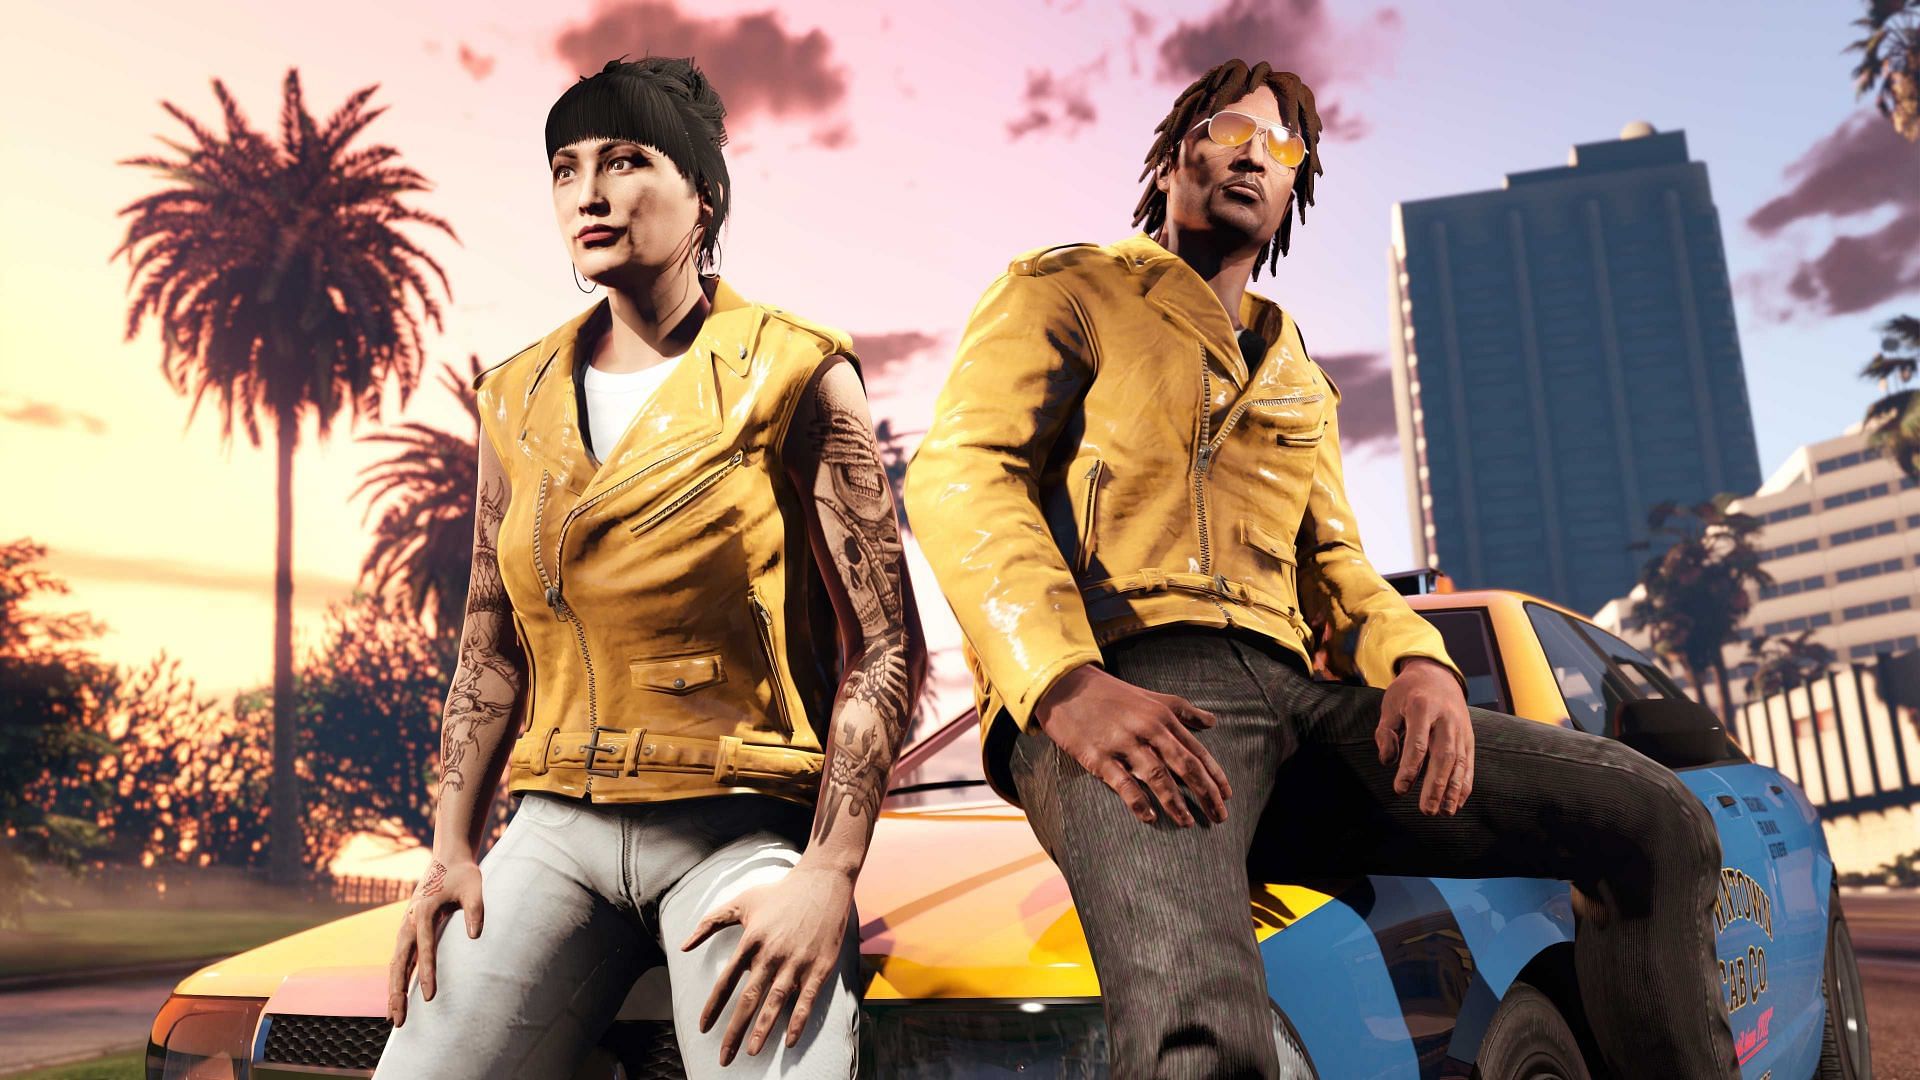 The cut jacket on the left (Image via Rockstar Games)